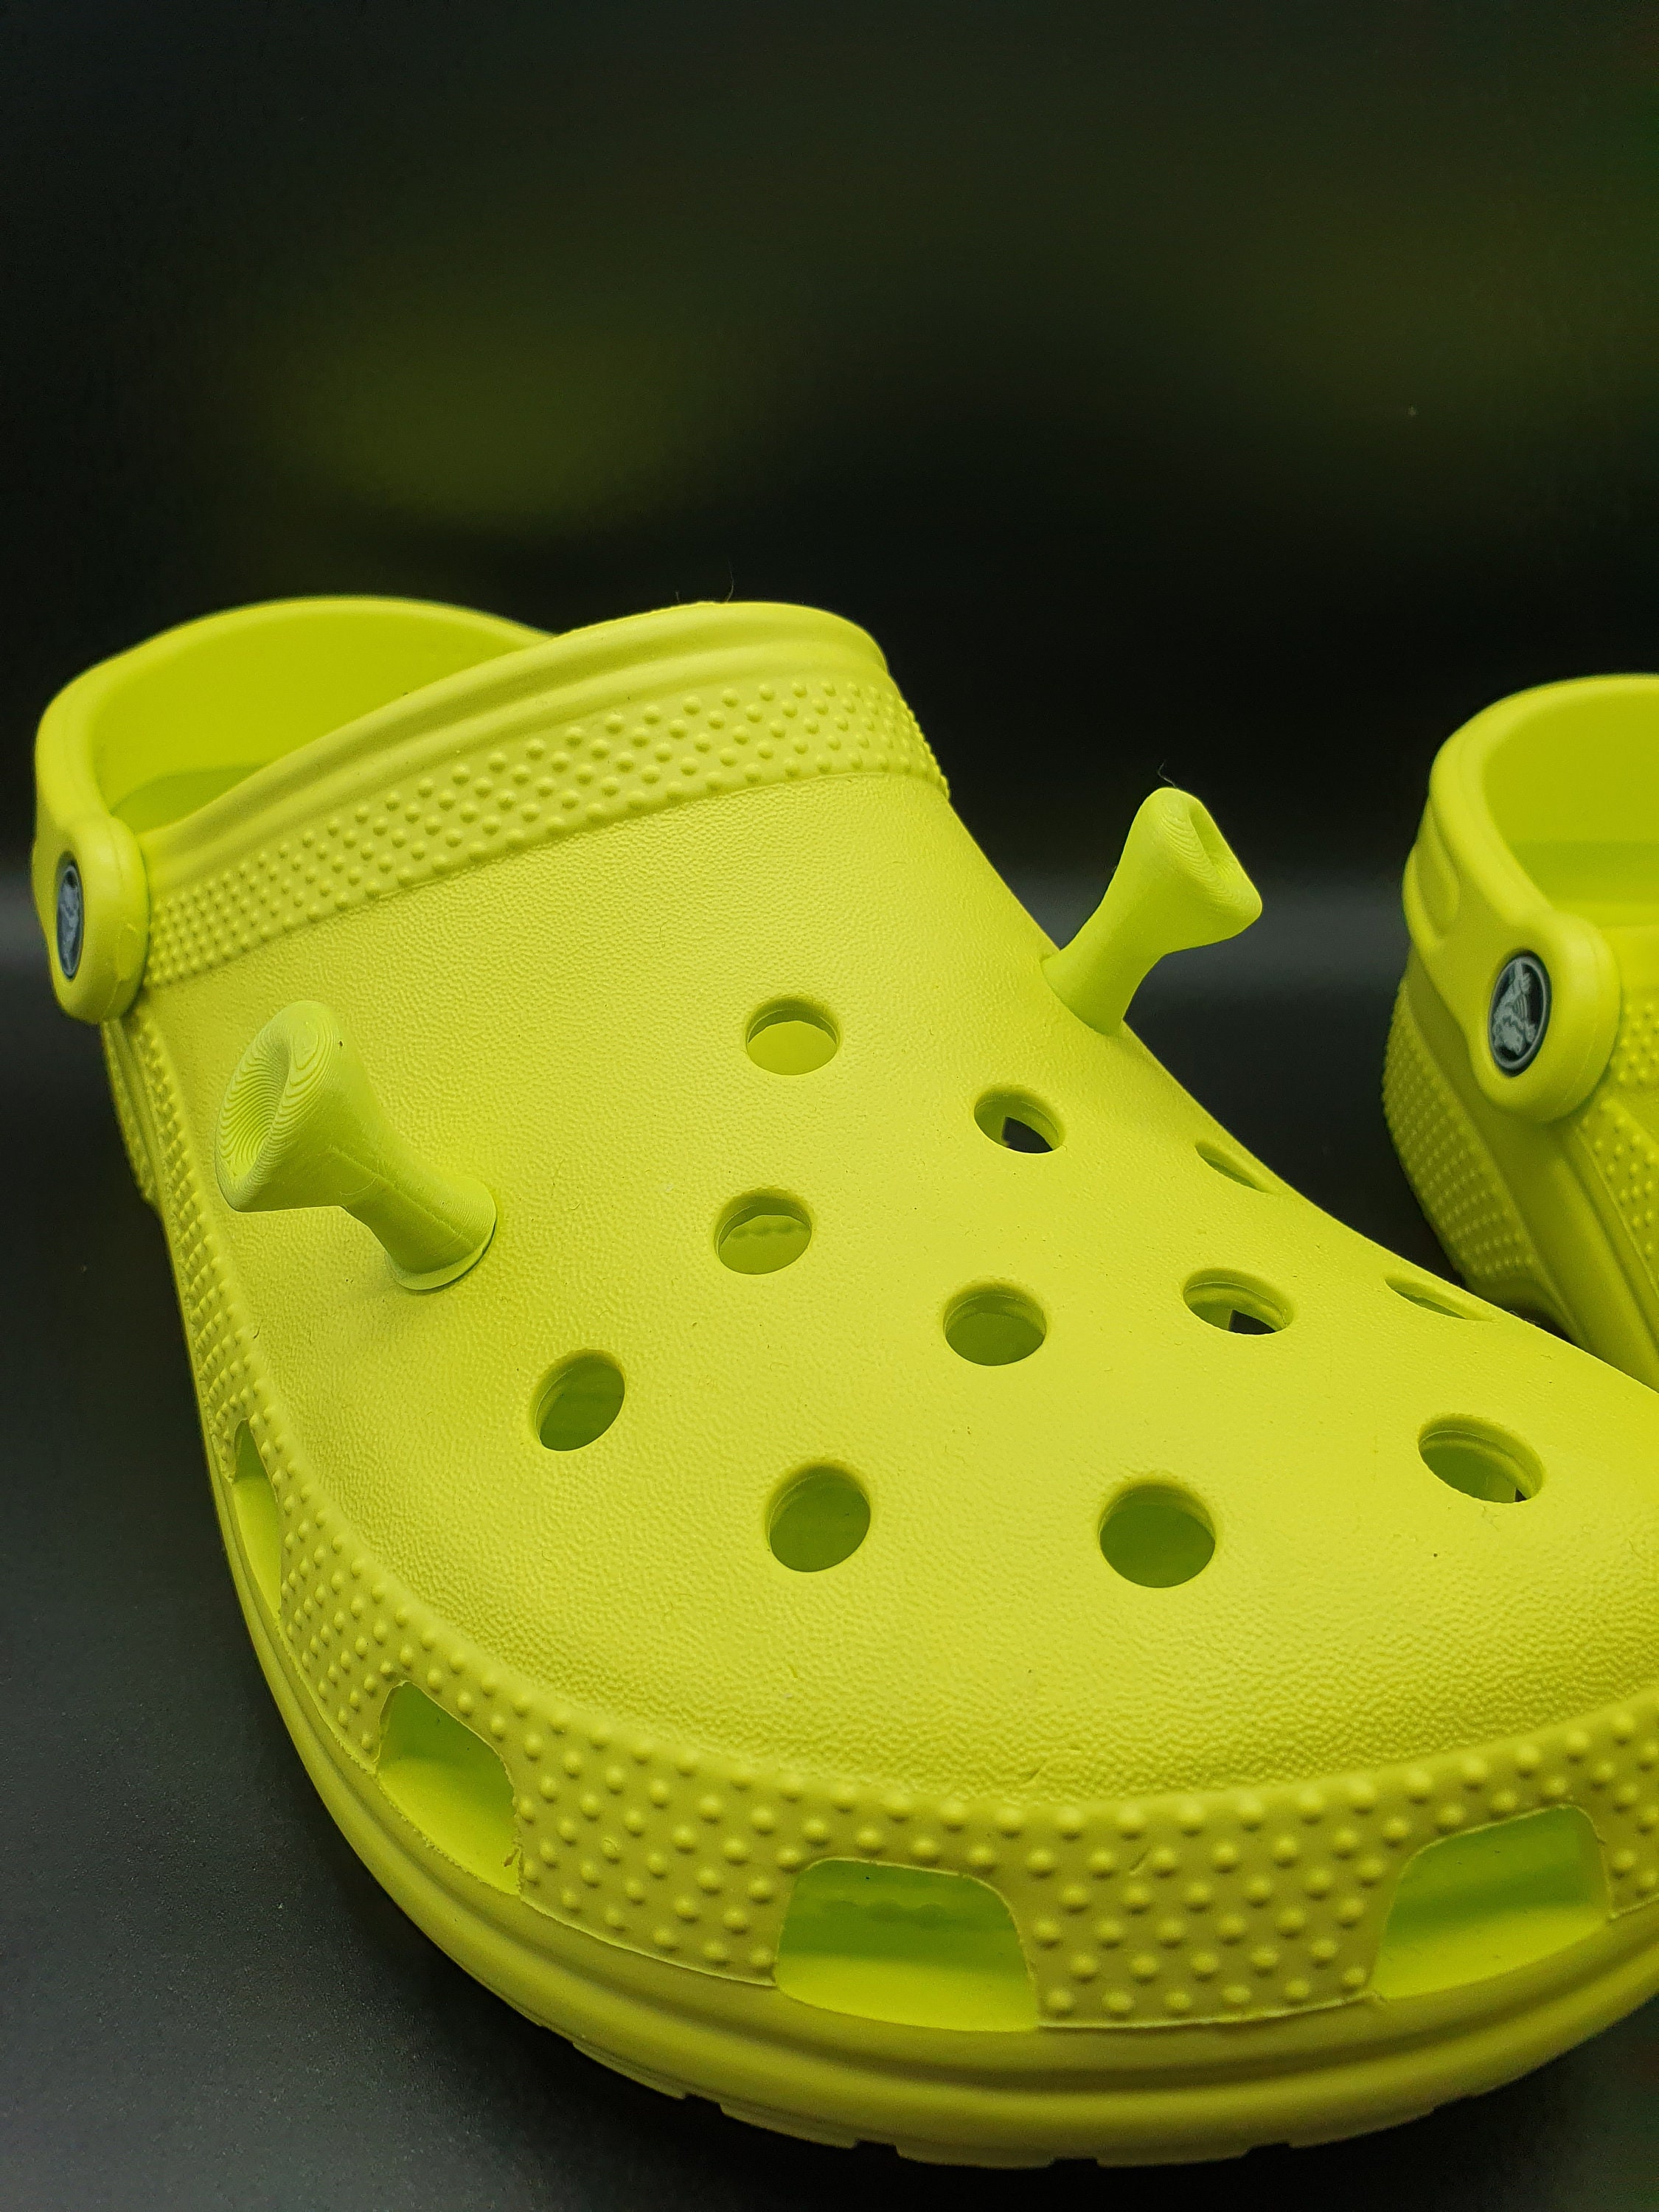  8 Pieces Shrek Ears Compatible with Crocs Shoes